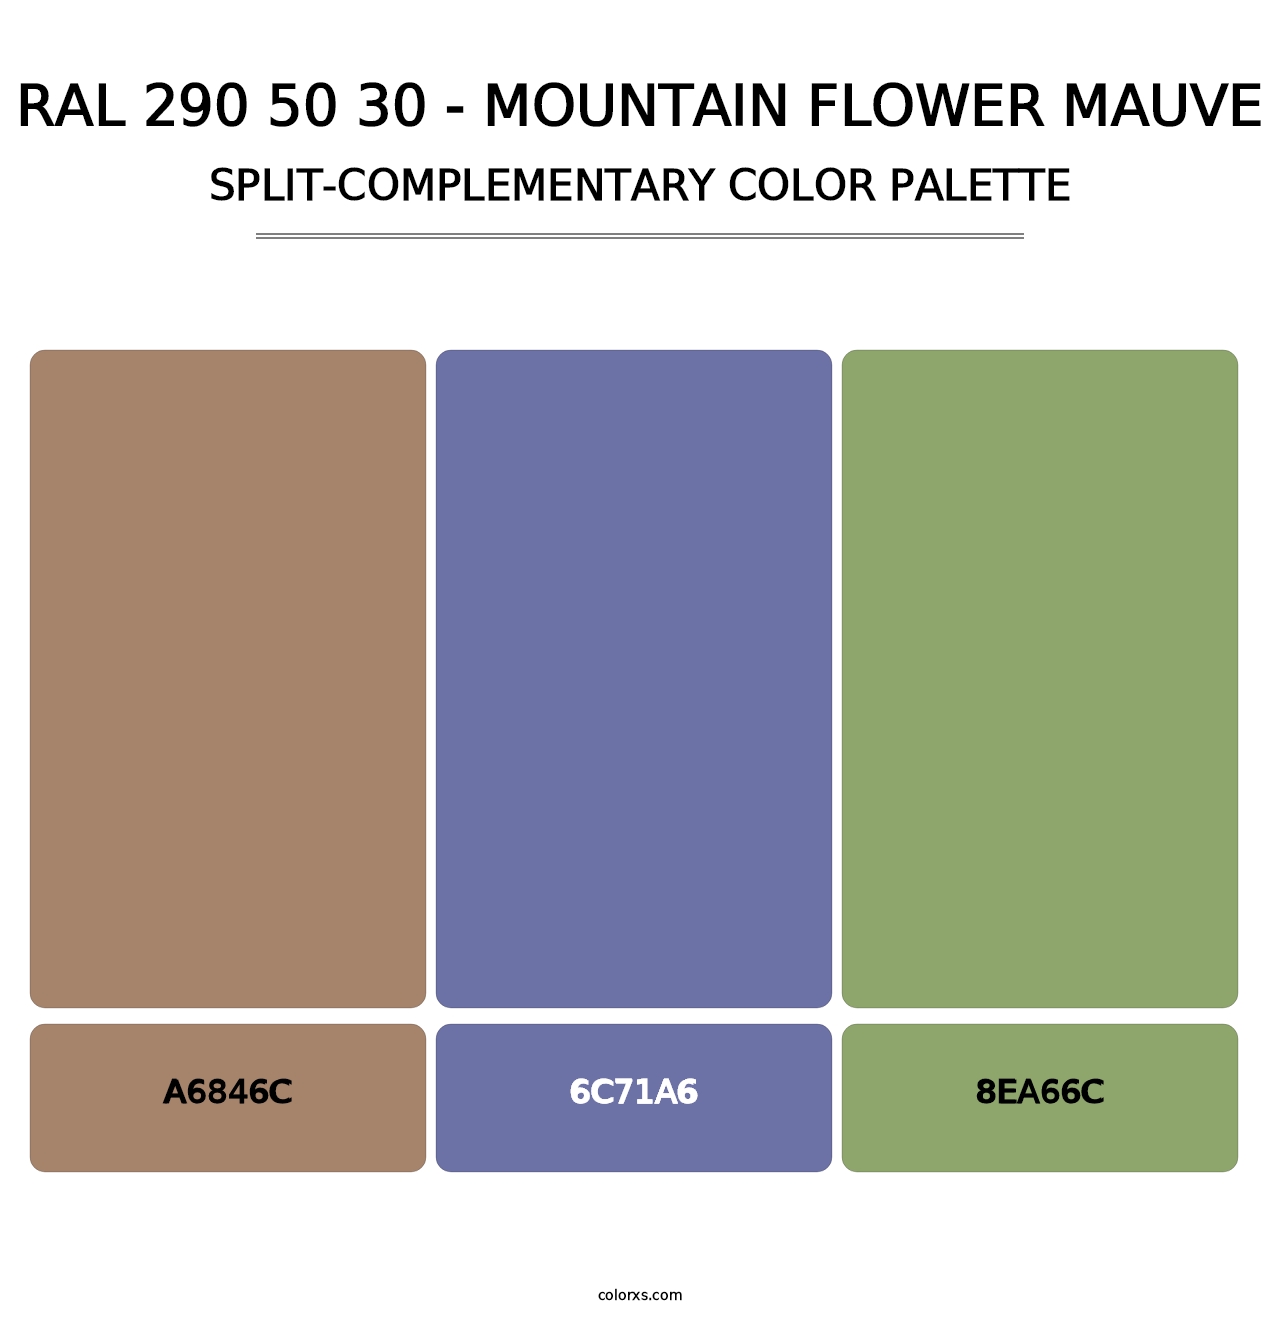 RAL 290 50 30 - Mountain Flower Mauve - Split-Complementary Color Palette